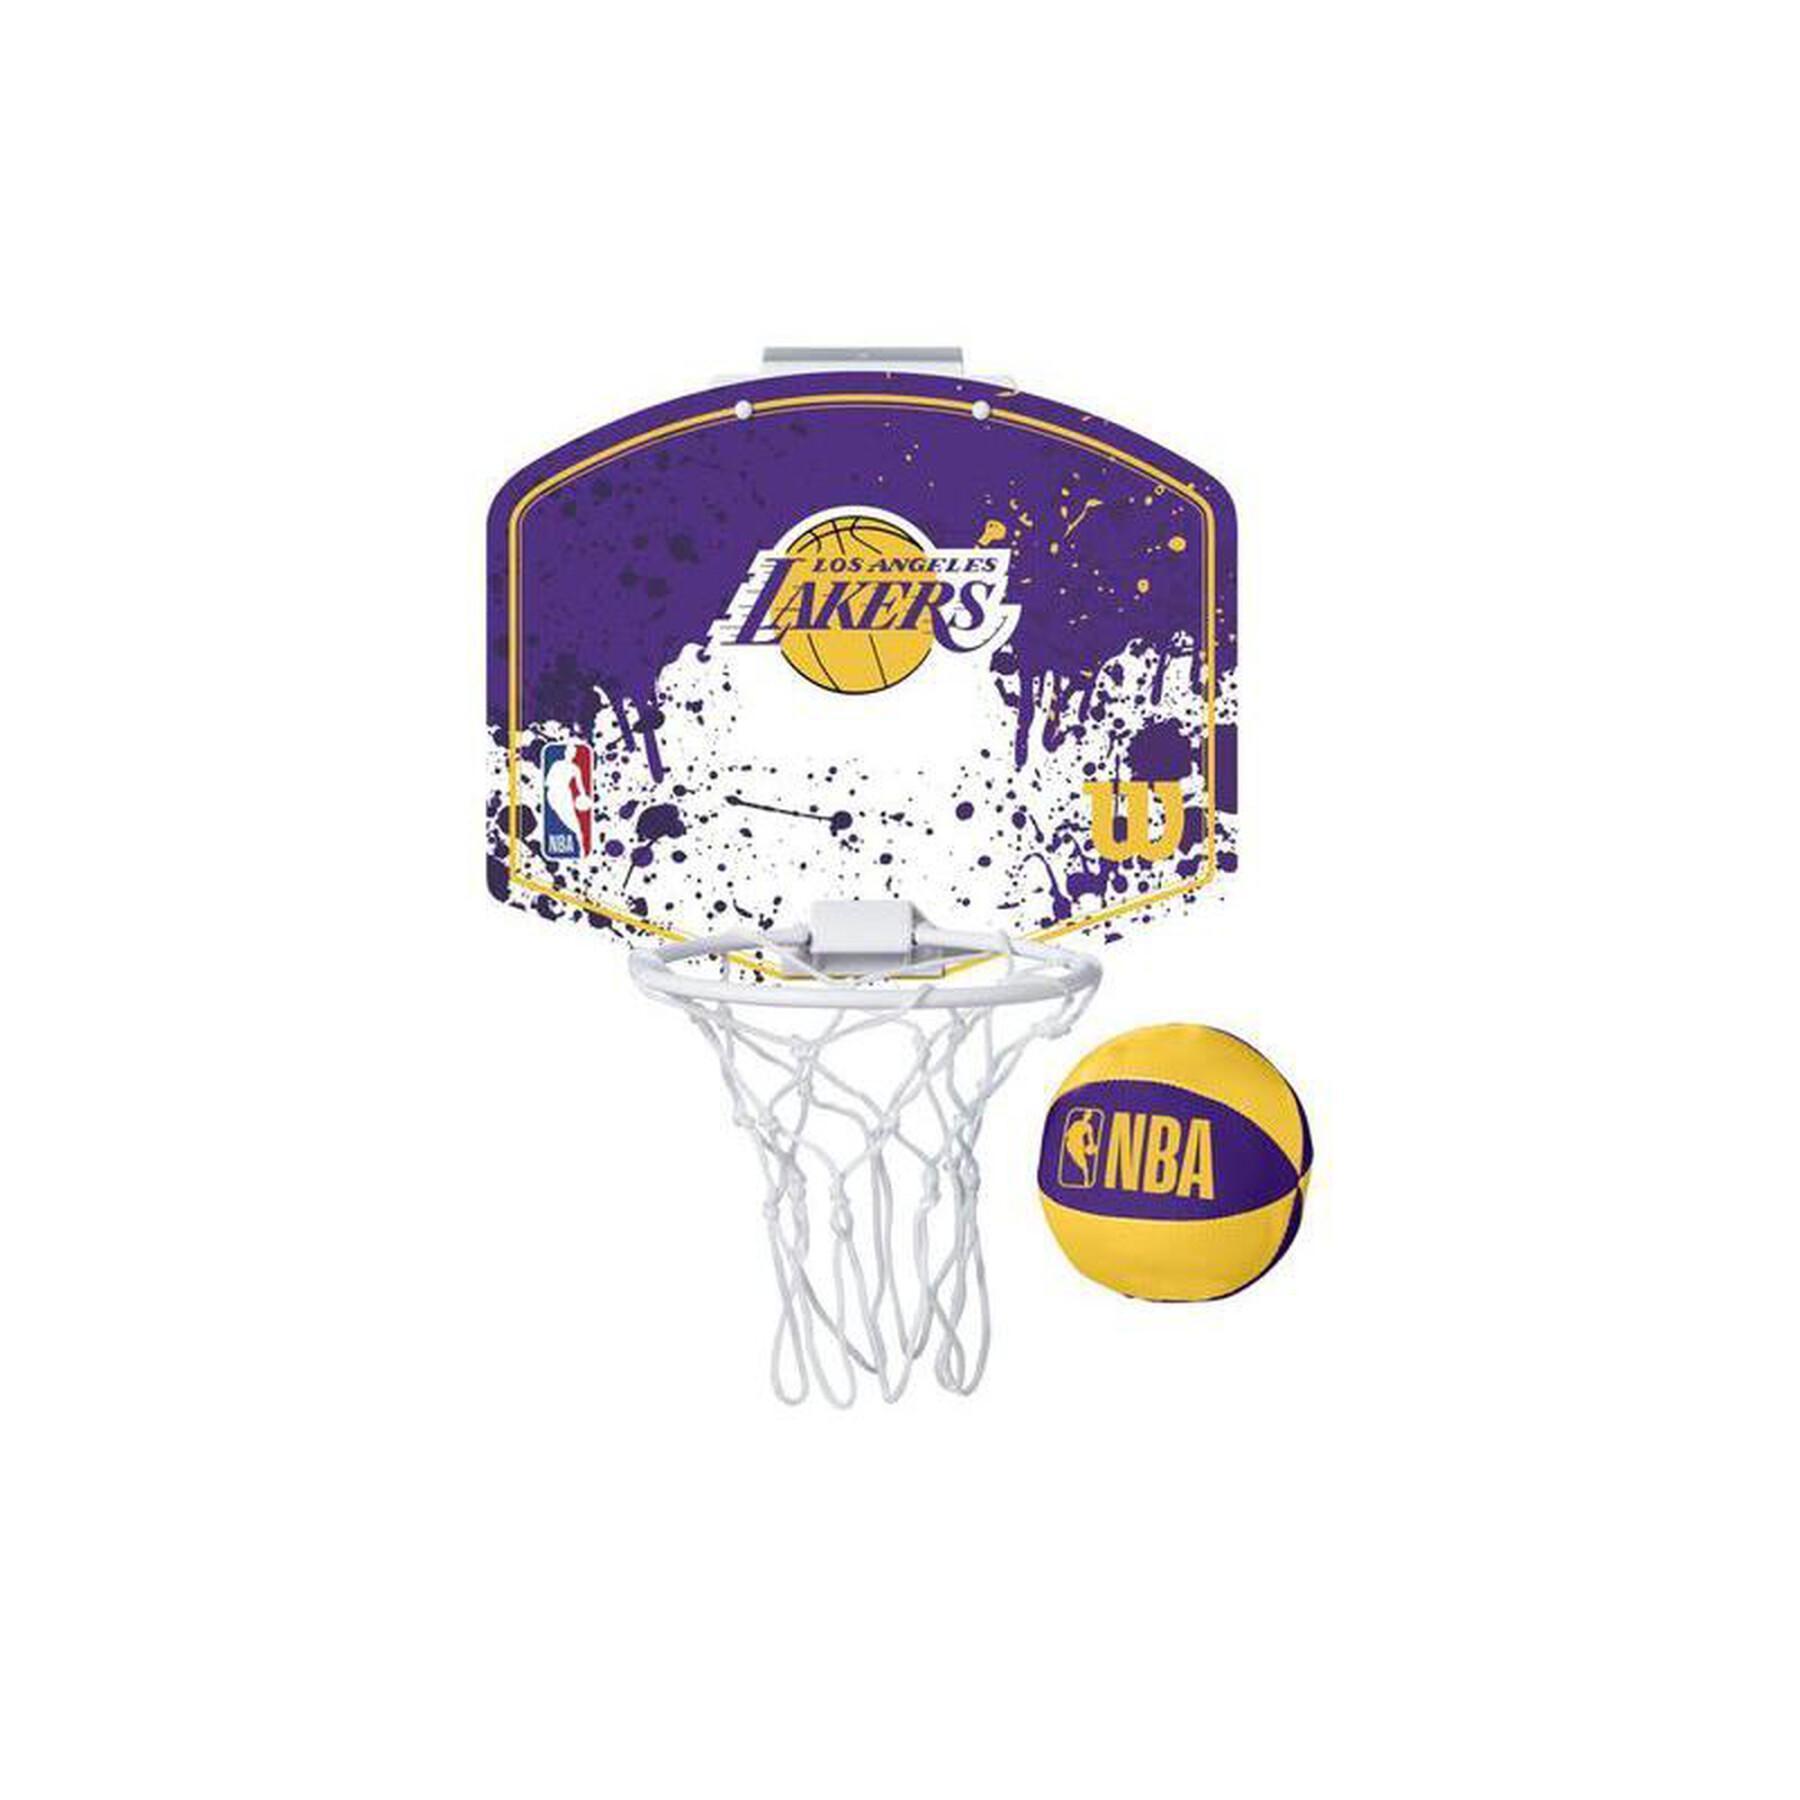 Mini NBA Basketballkorb Los Angeles Lakers